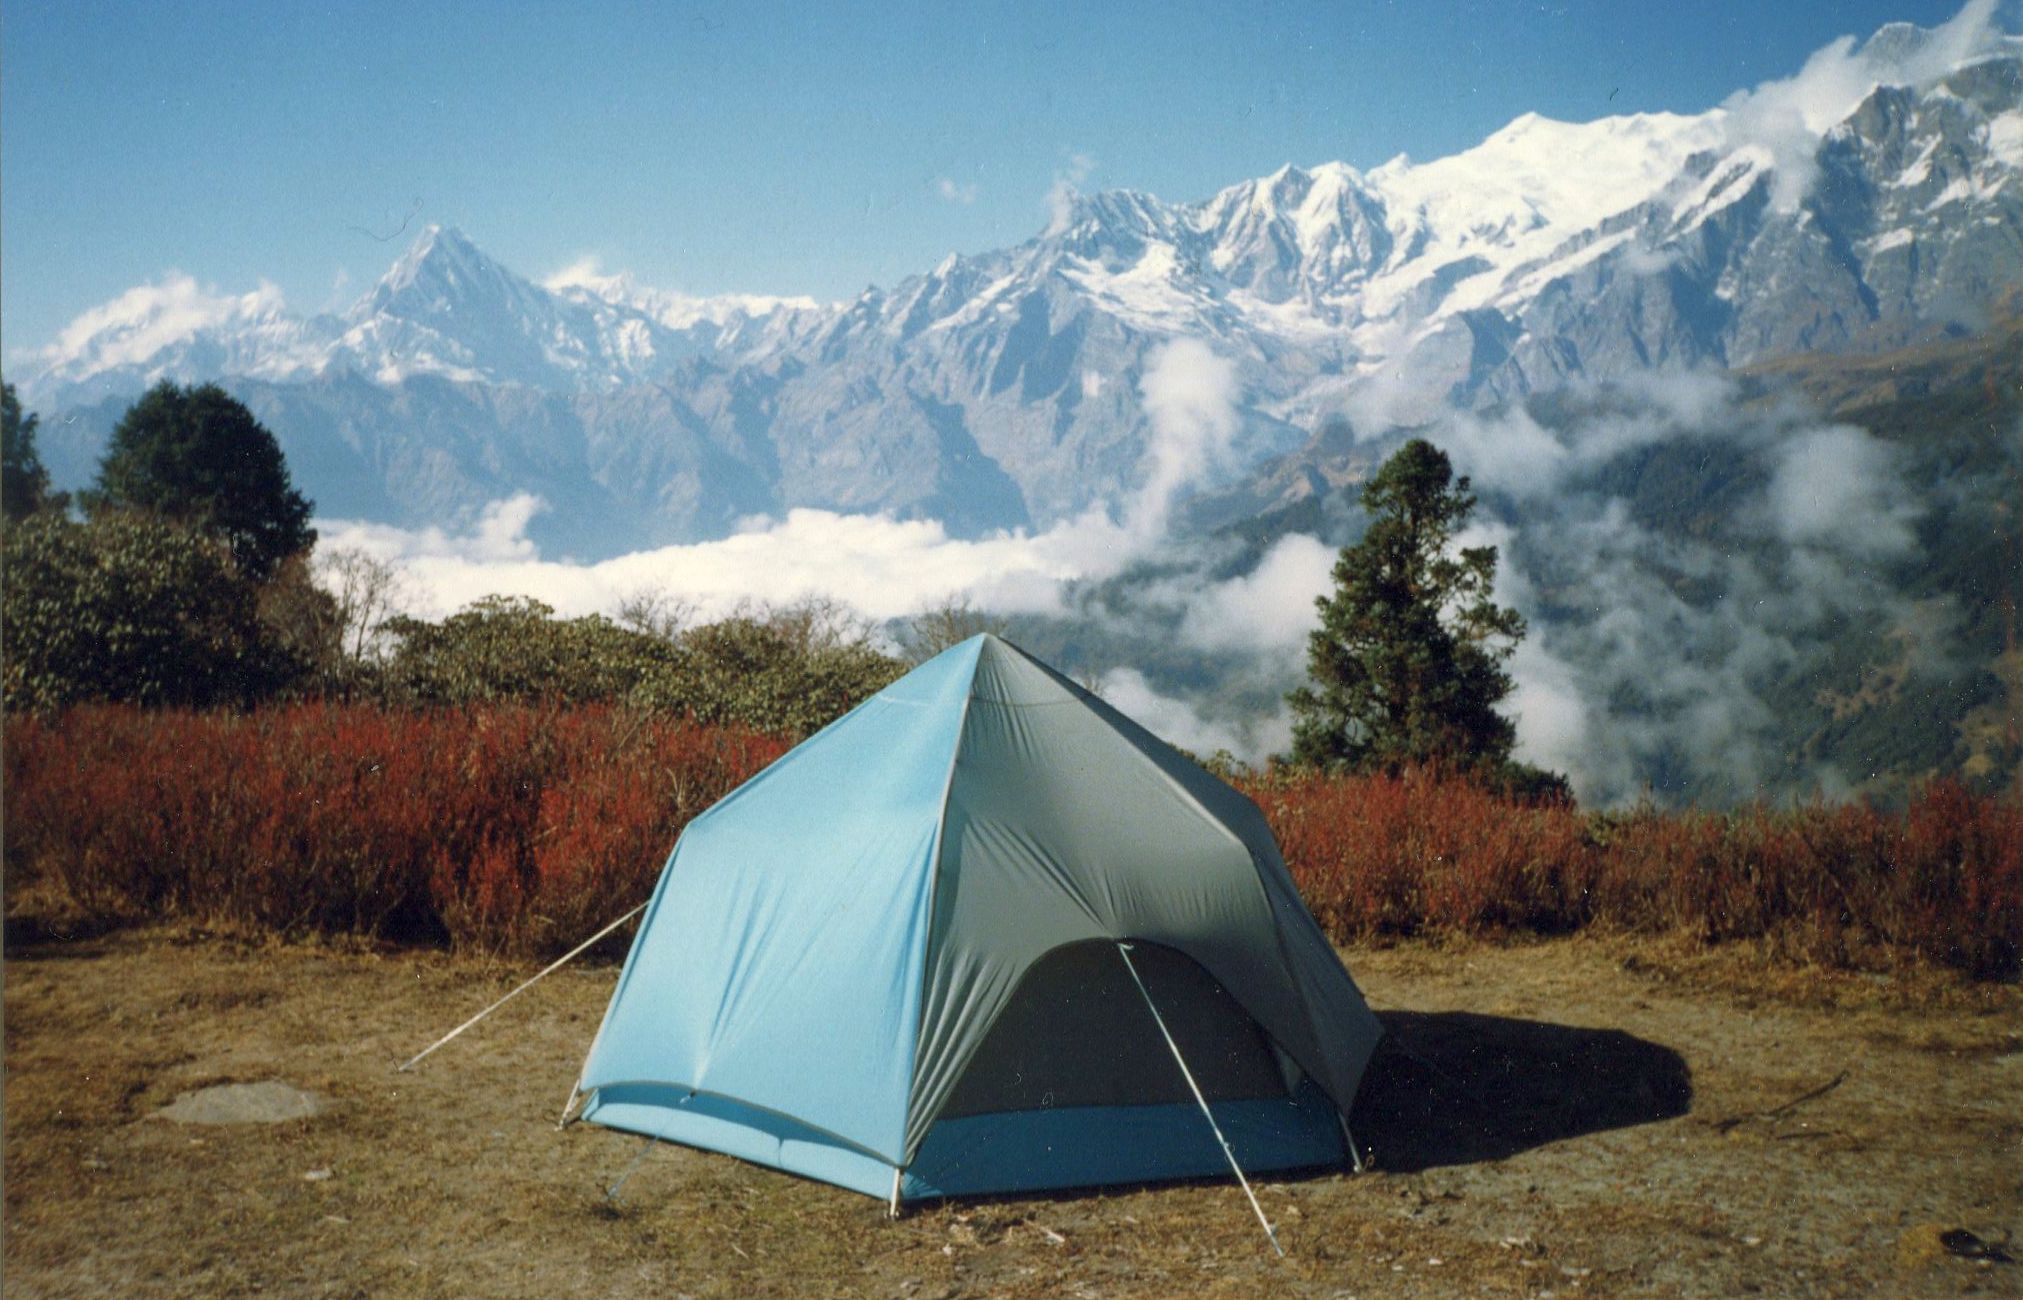 Macchapucchre ( Fishtail Mountain ) and Annapurna Himal from Rambrong Danda